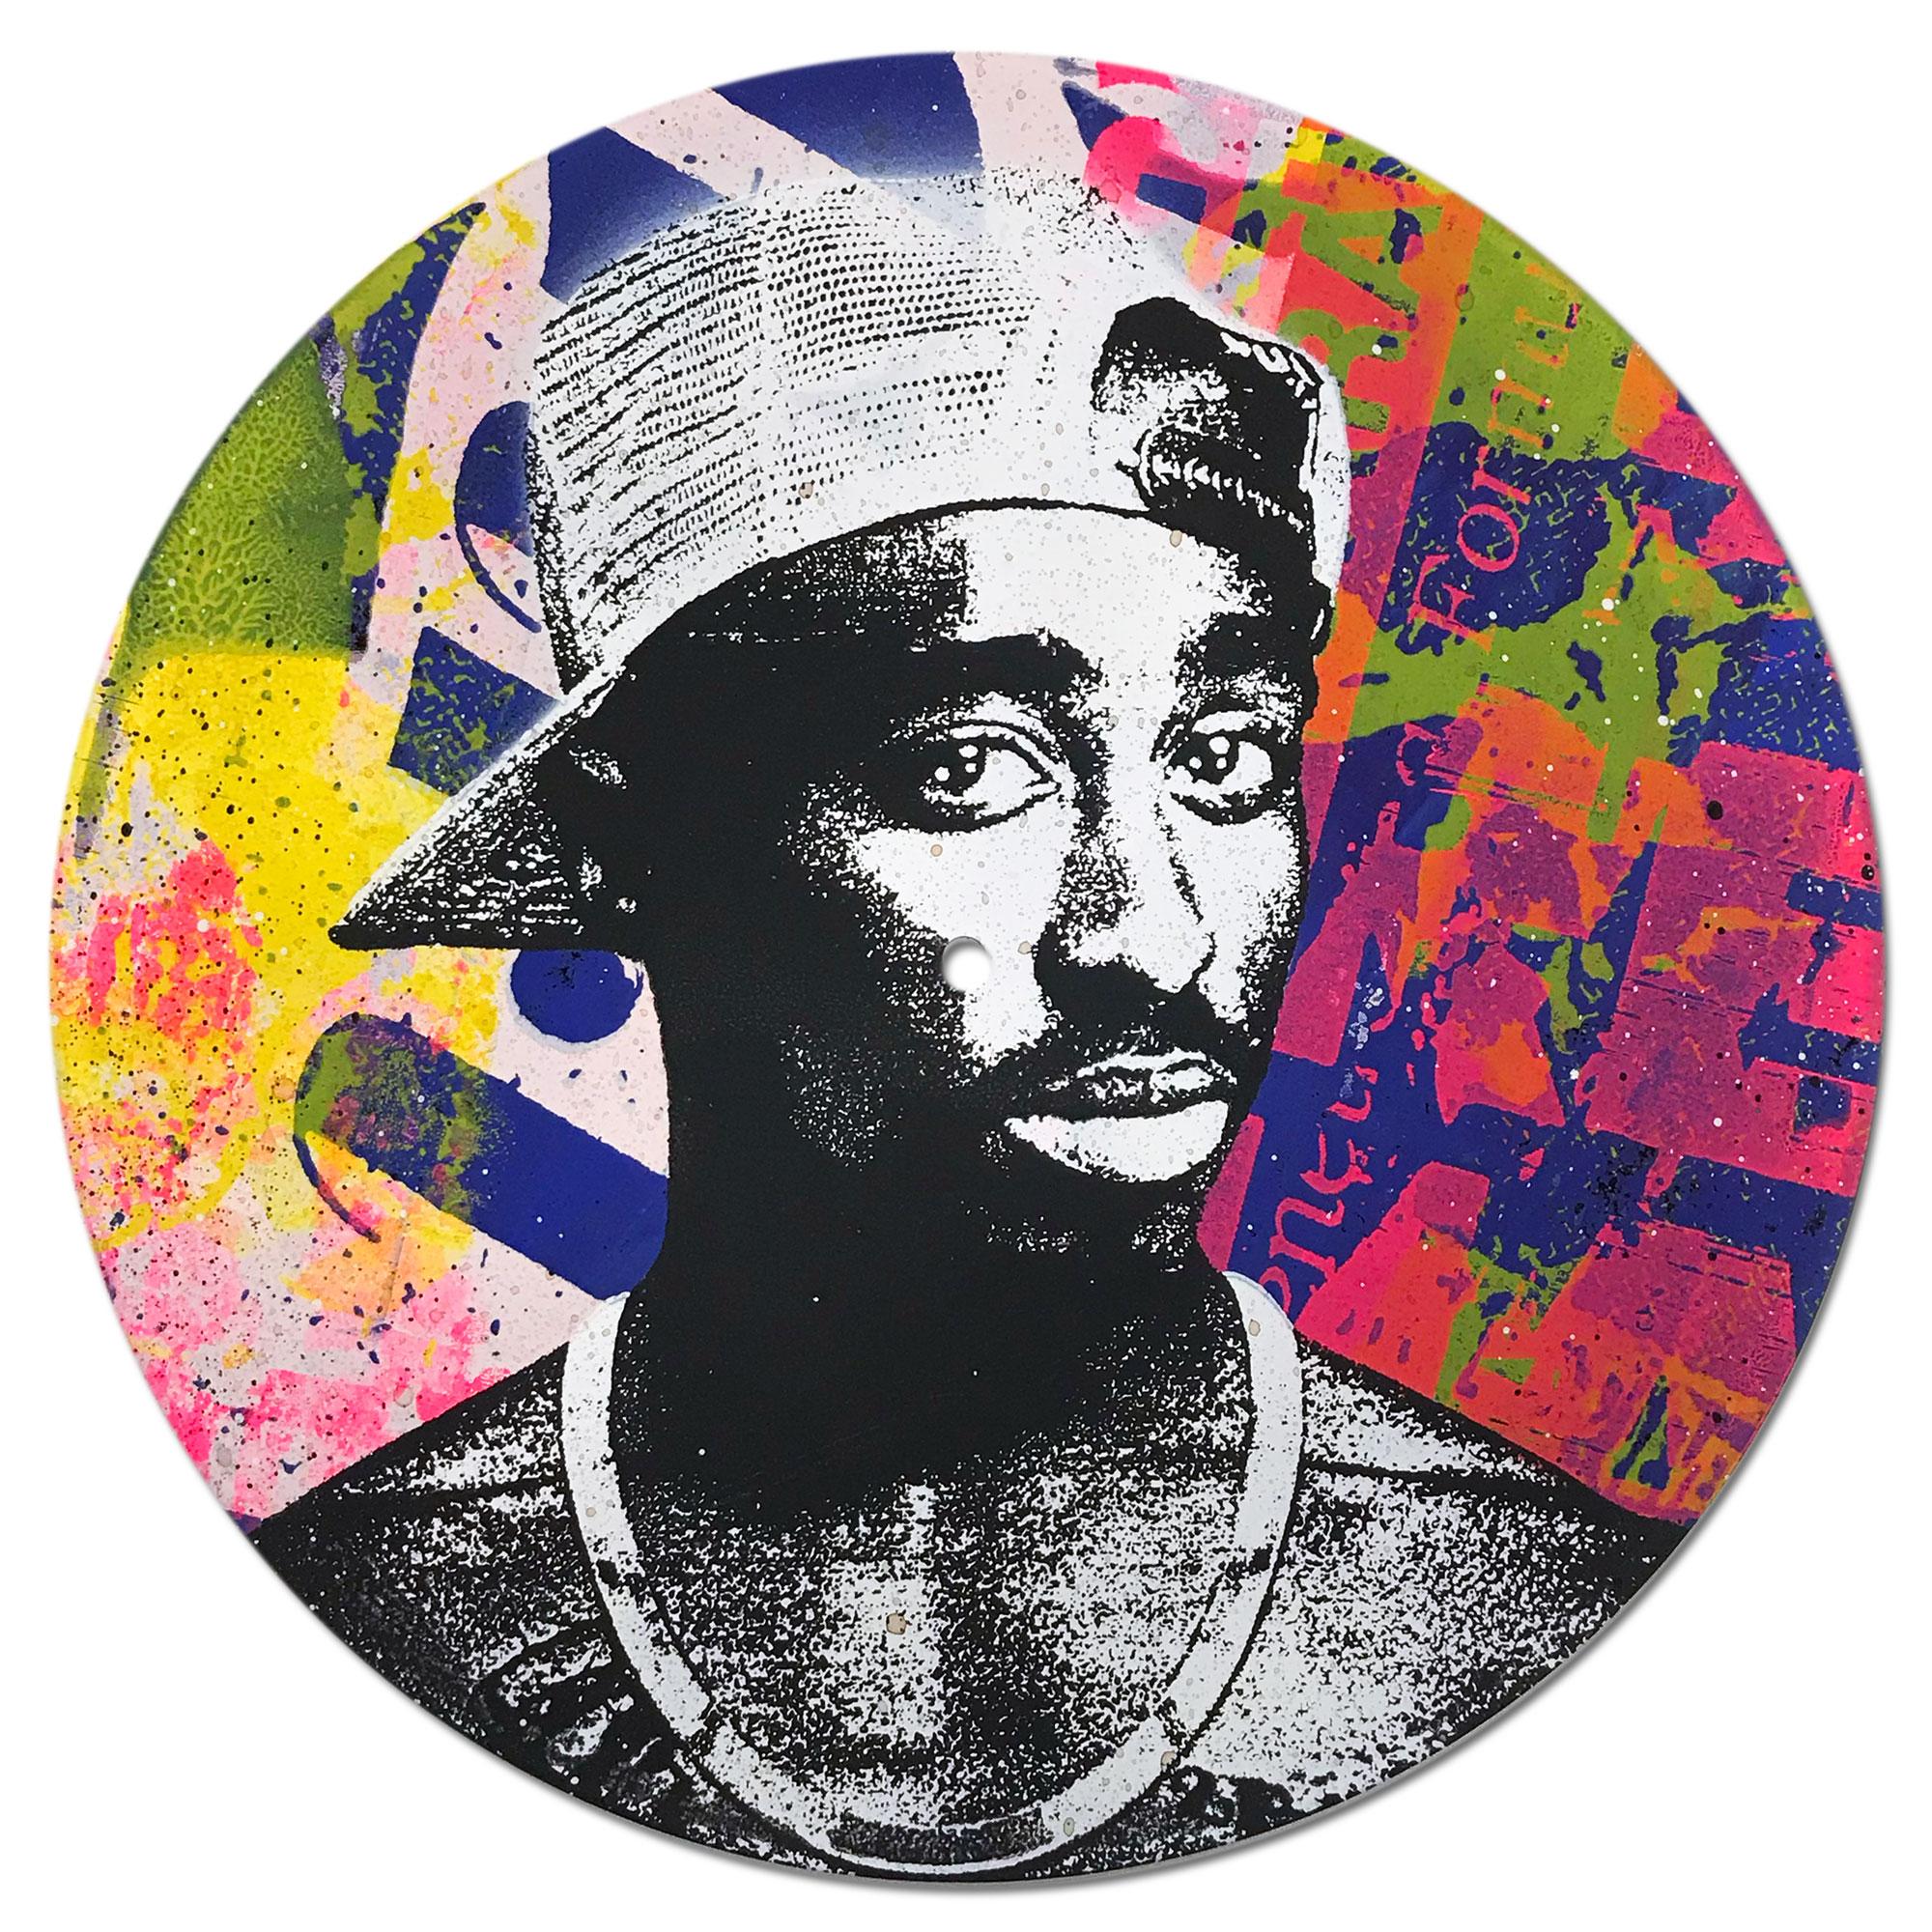 Tupac Shakur Vinyl Greg Gossel Pop Art LP Record (Singles & Sets Available) For Sale 1